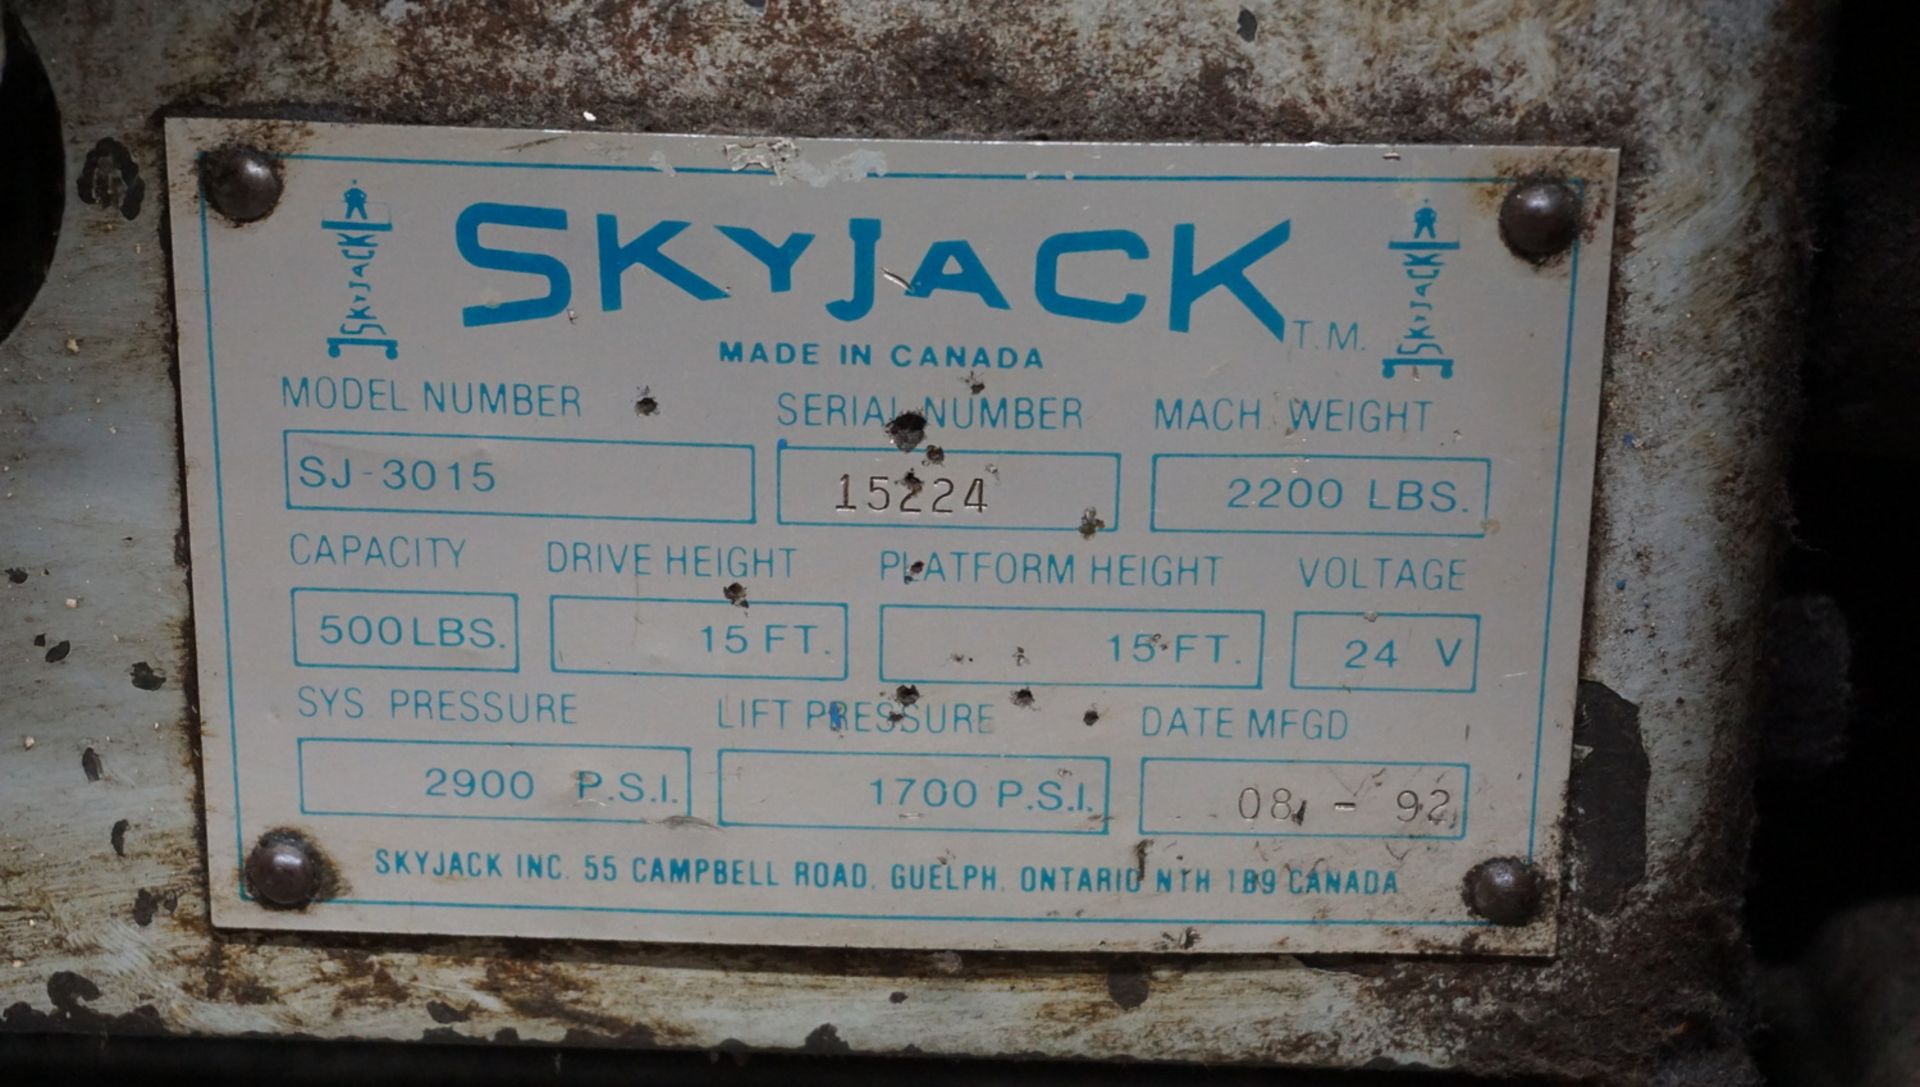 SKYJACK SJ-3015 ELECTRIC SCISSOR LIFT W/ 15' MAX PLATFORM HEIGHT, 500LBS CAP, S/N 15224 - Image 4 of 4